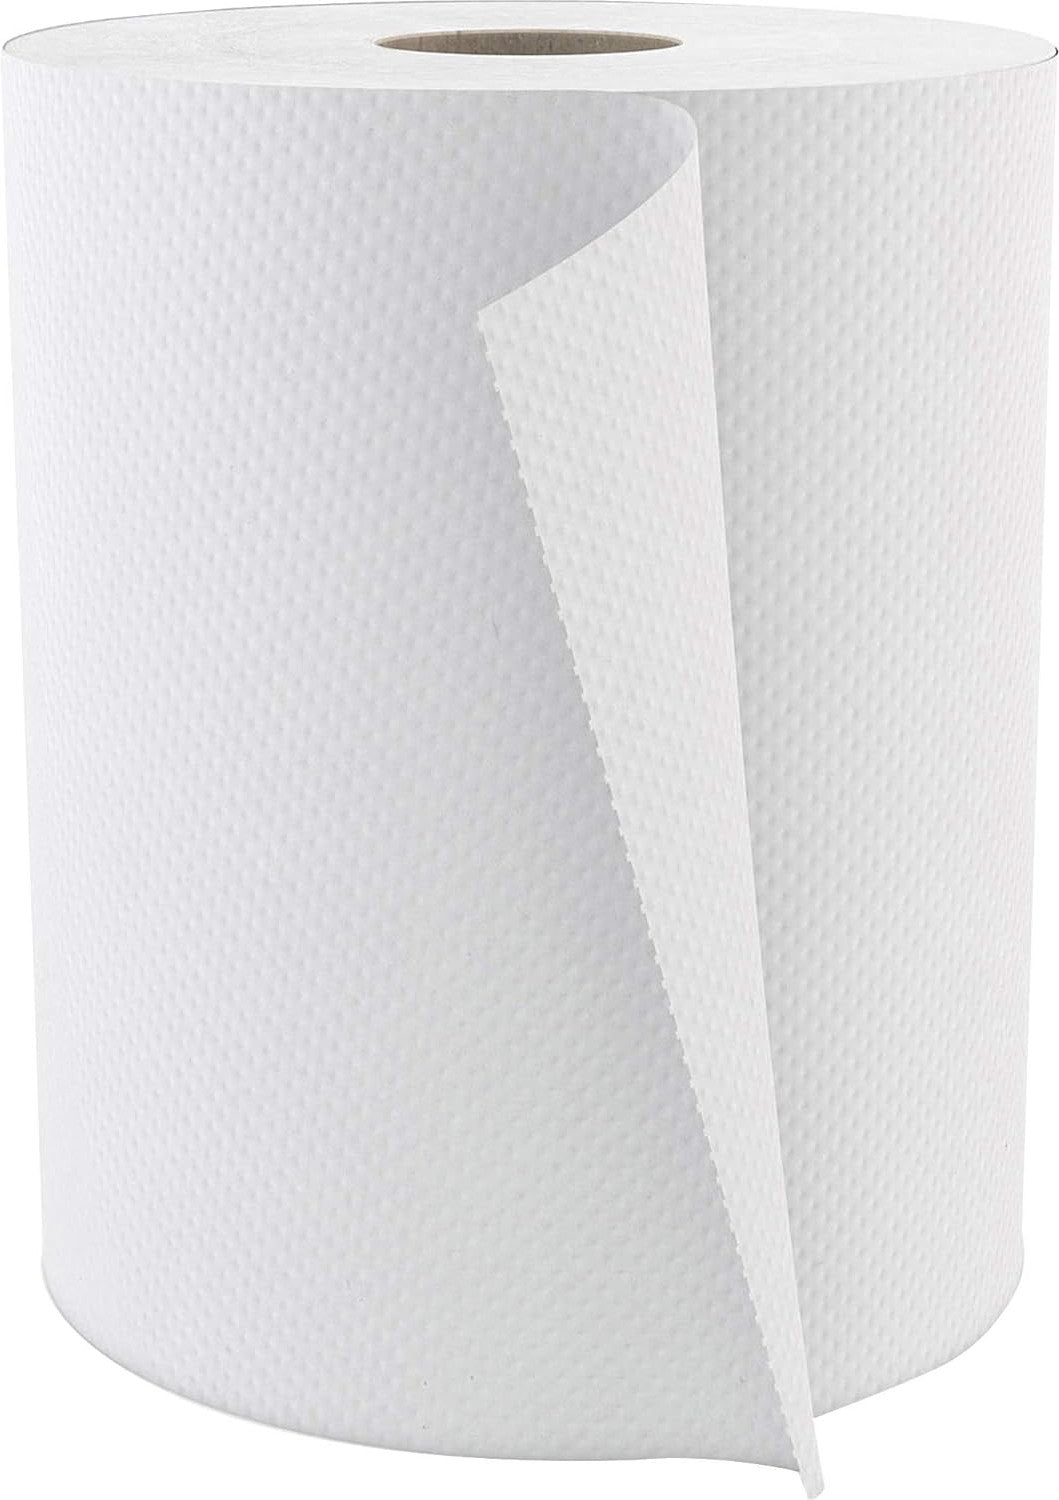 Cascades Tissue Group - 800 Feet Select White Roll Towel, 6rl/cs - H280/1762